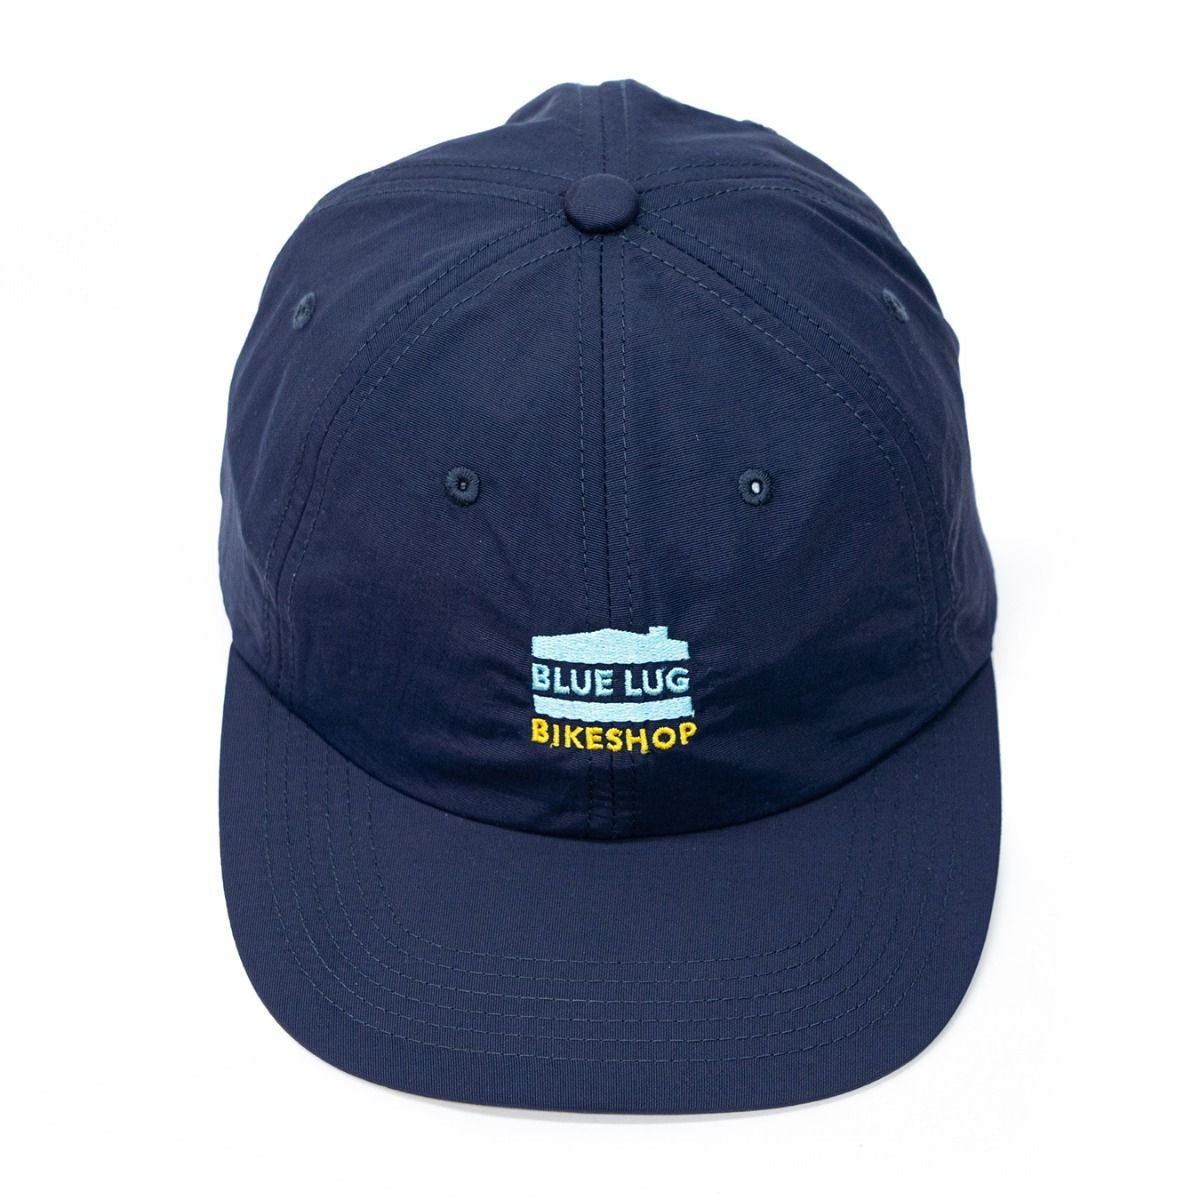 *BLUE LUG* house logo cap (navy)